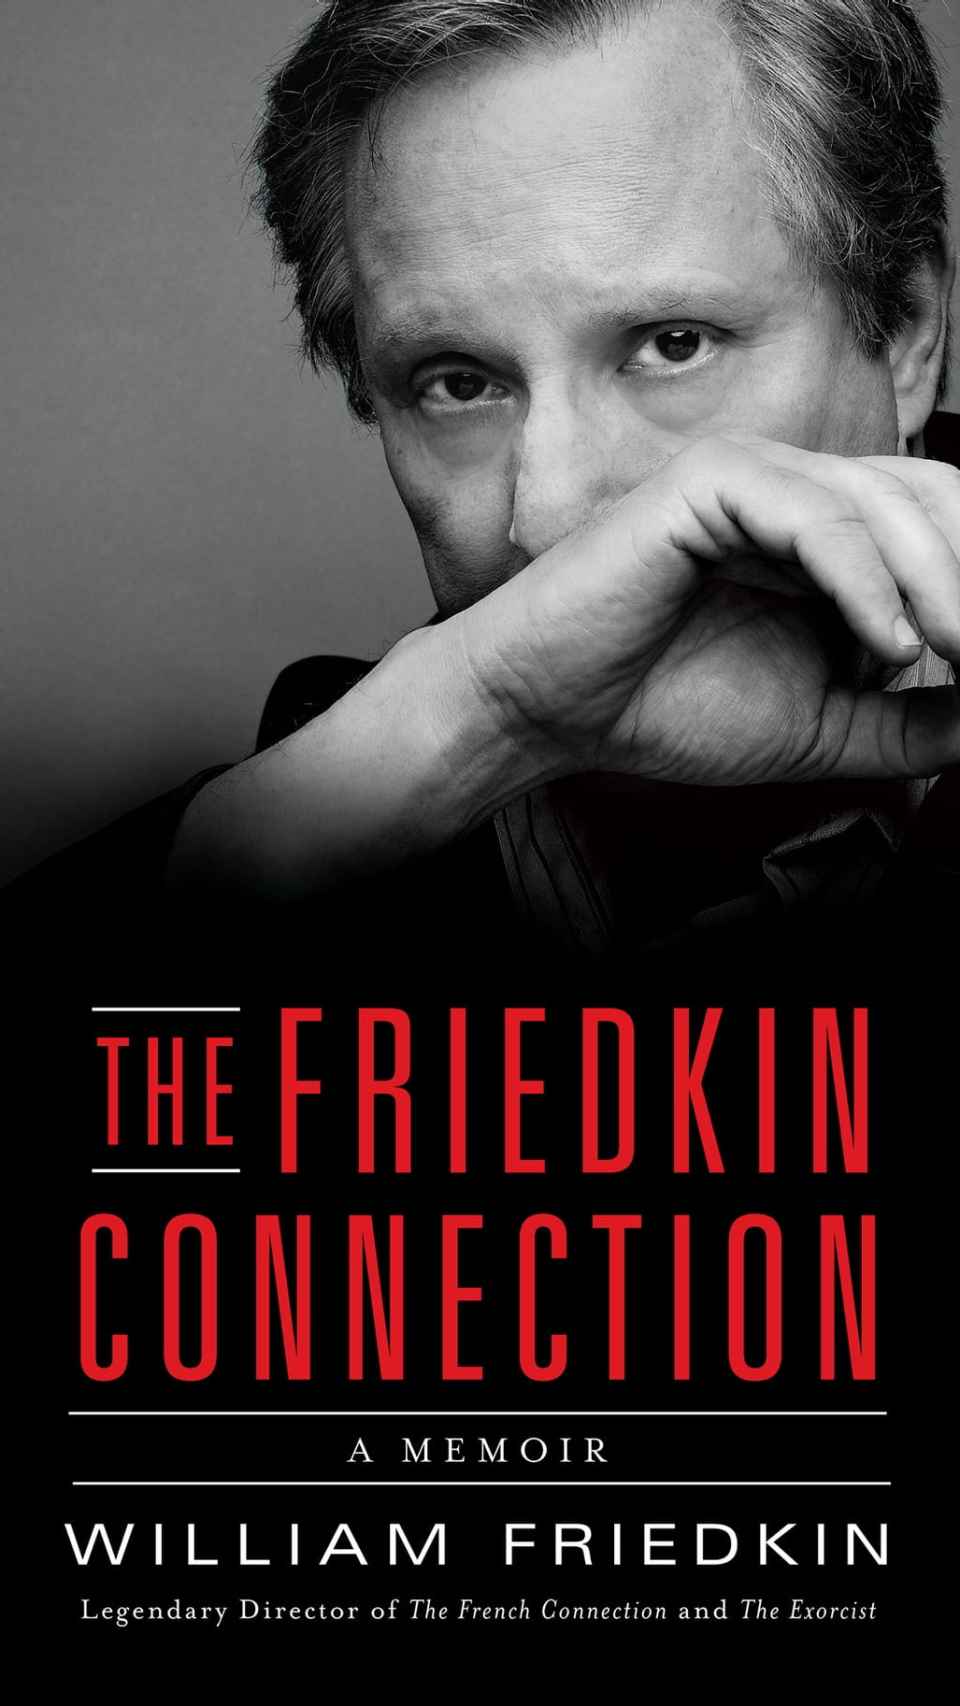 Las memorias de William Friedkin